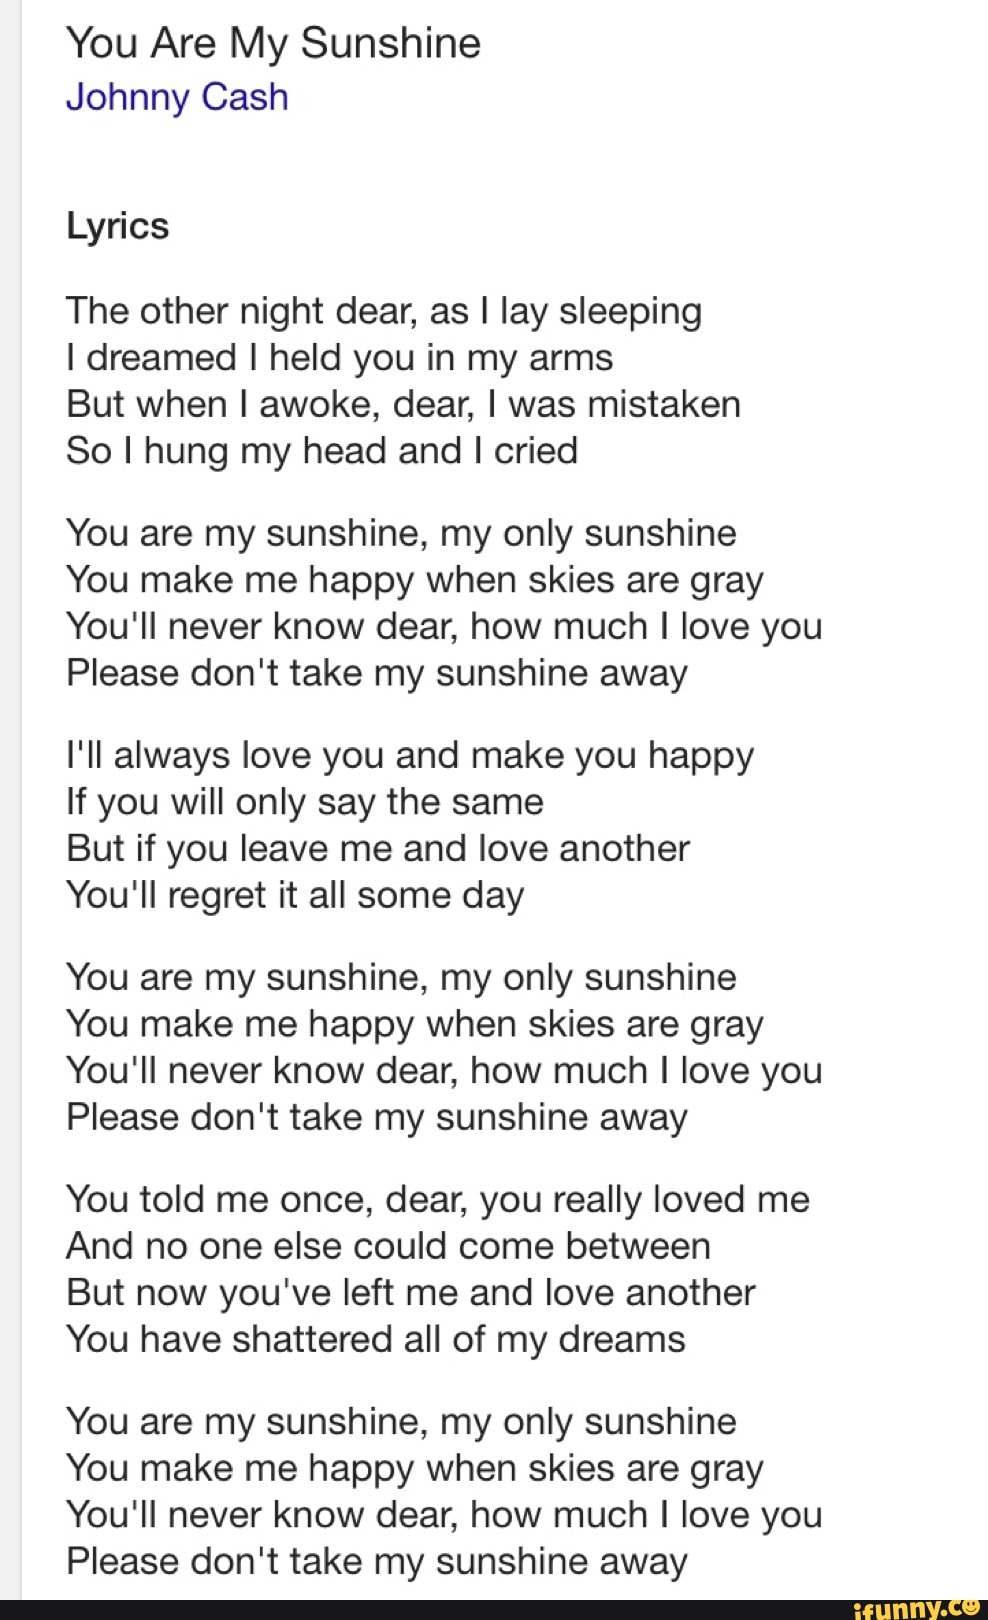 You Are My Sunshine Johnny Cash Lyrics The Other Night Dear As I Lay Sleeping I